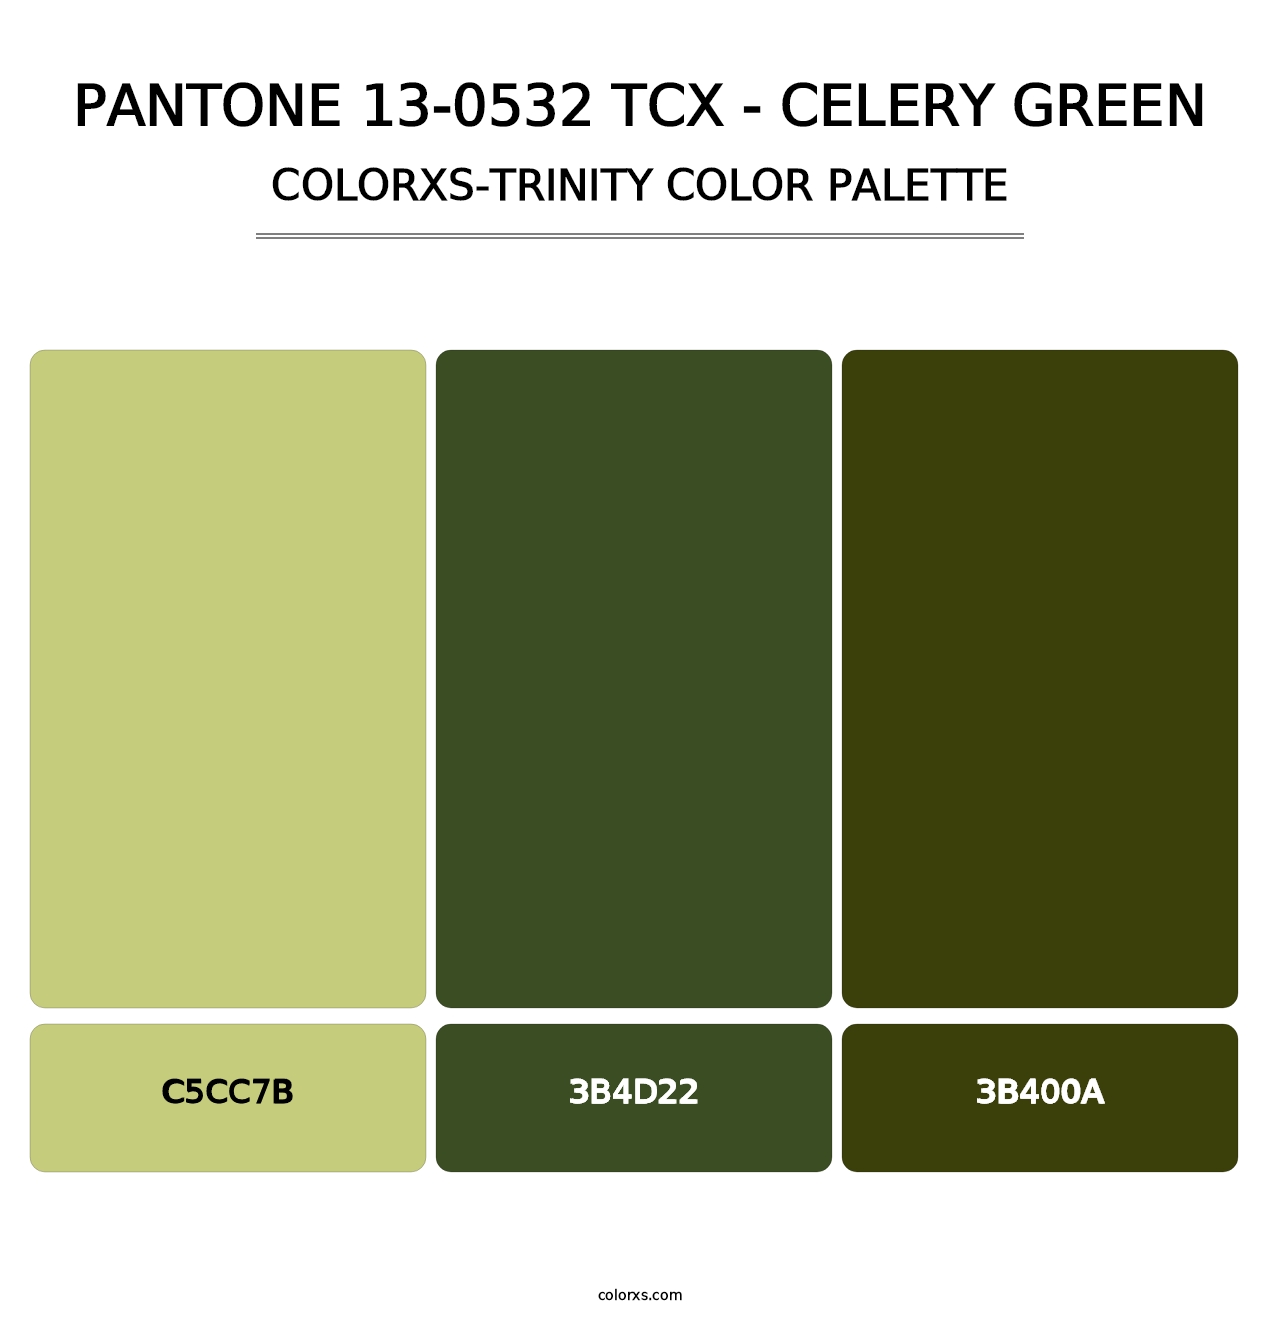 PANTONE 13-0532 TCX - Celery Green - Colorxs Trinity Palette